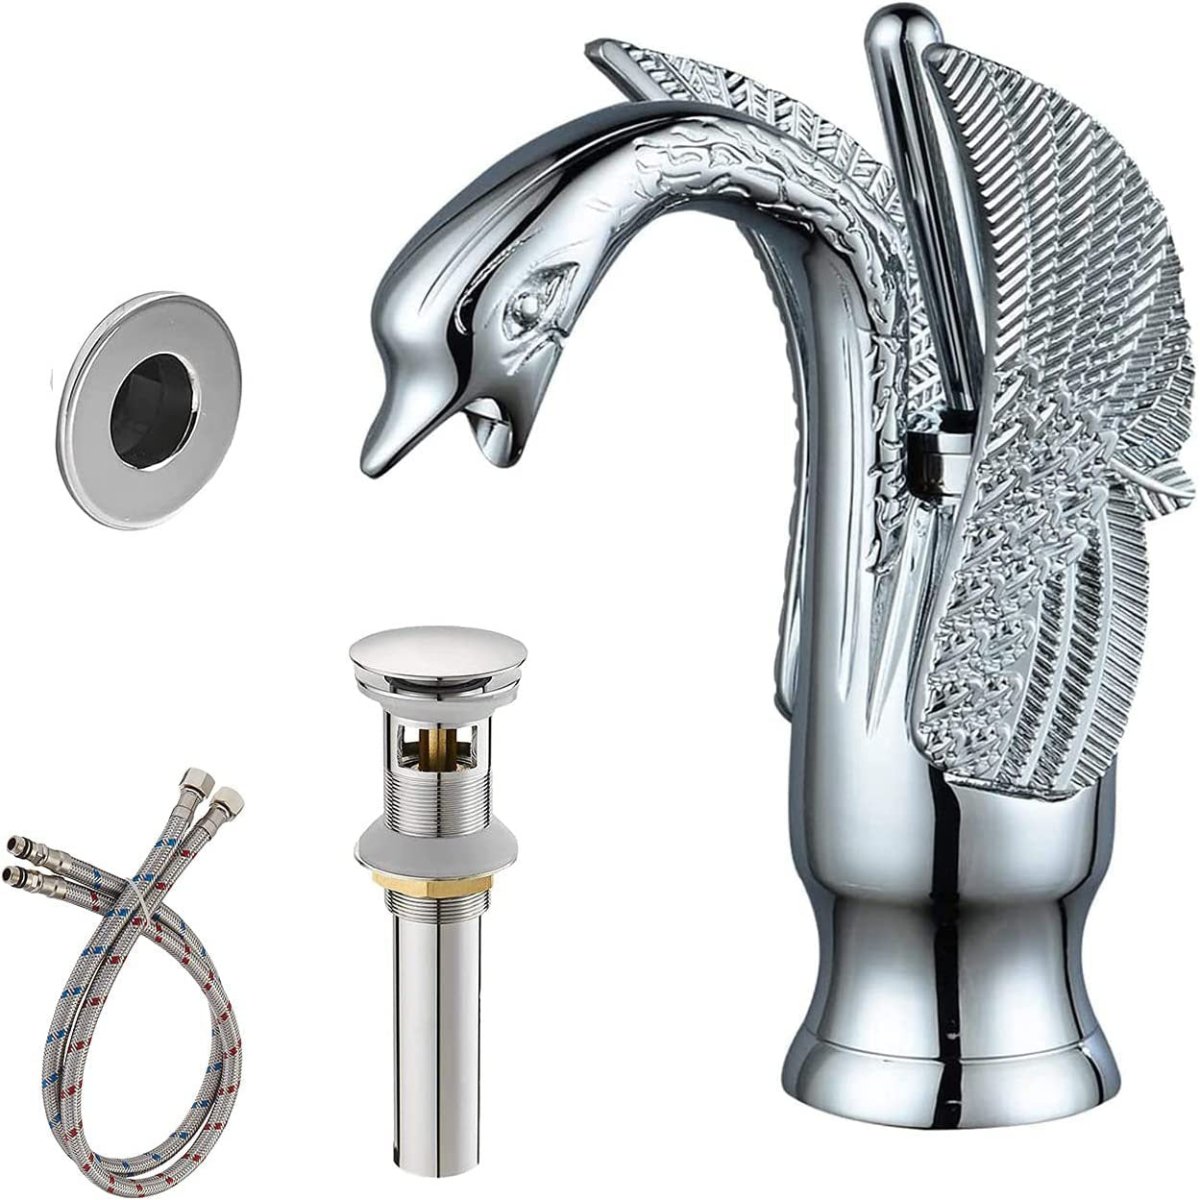 Swan Single Hole 1-Handle Bathroom Sink Faucet Chrome - buyfaucet.com